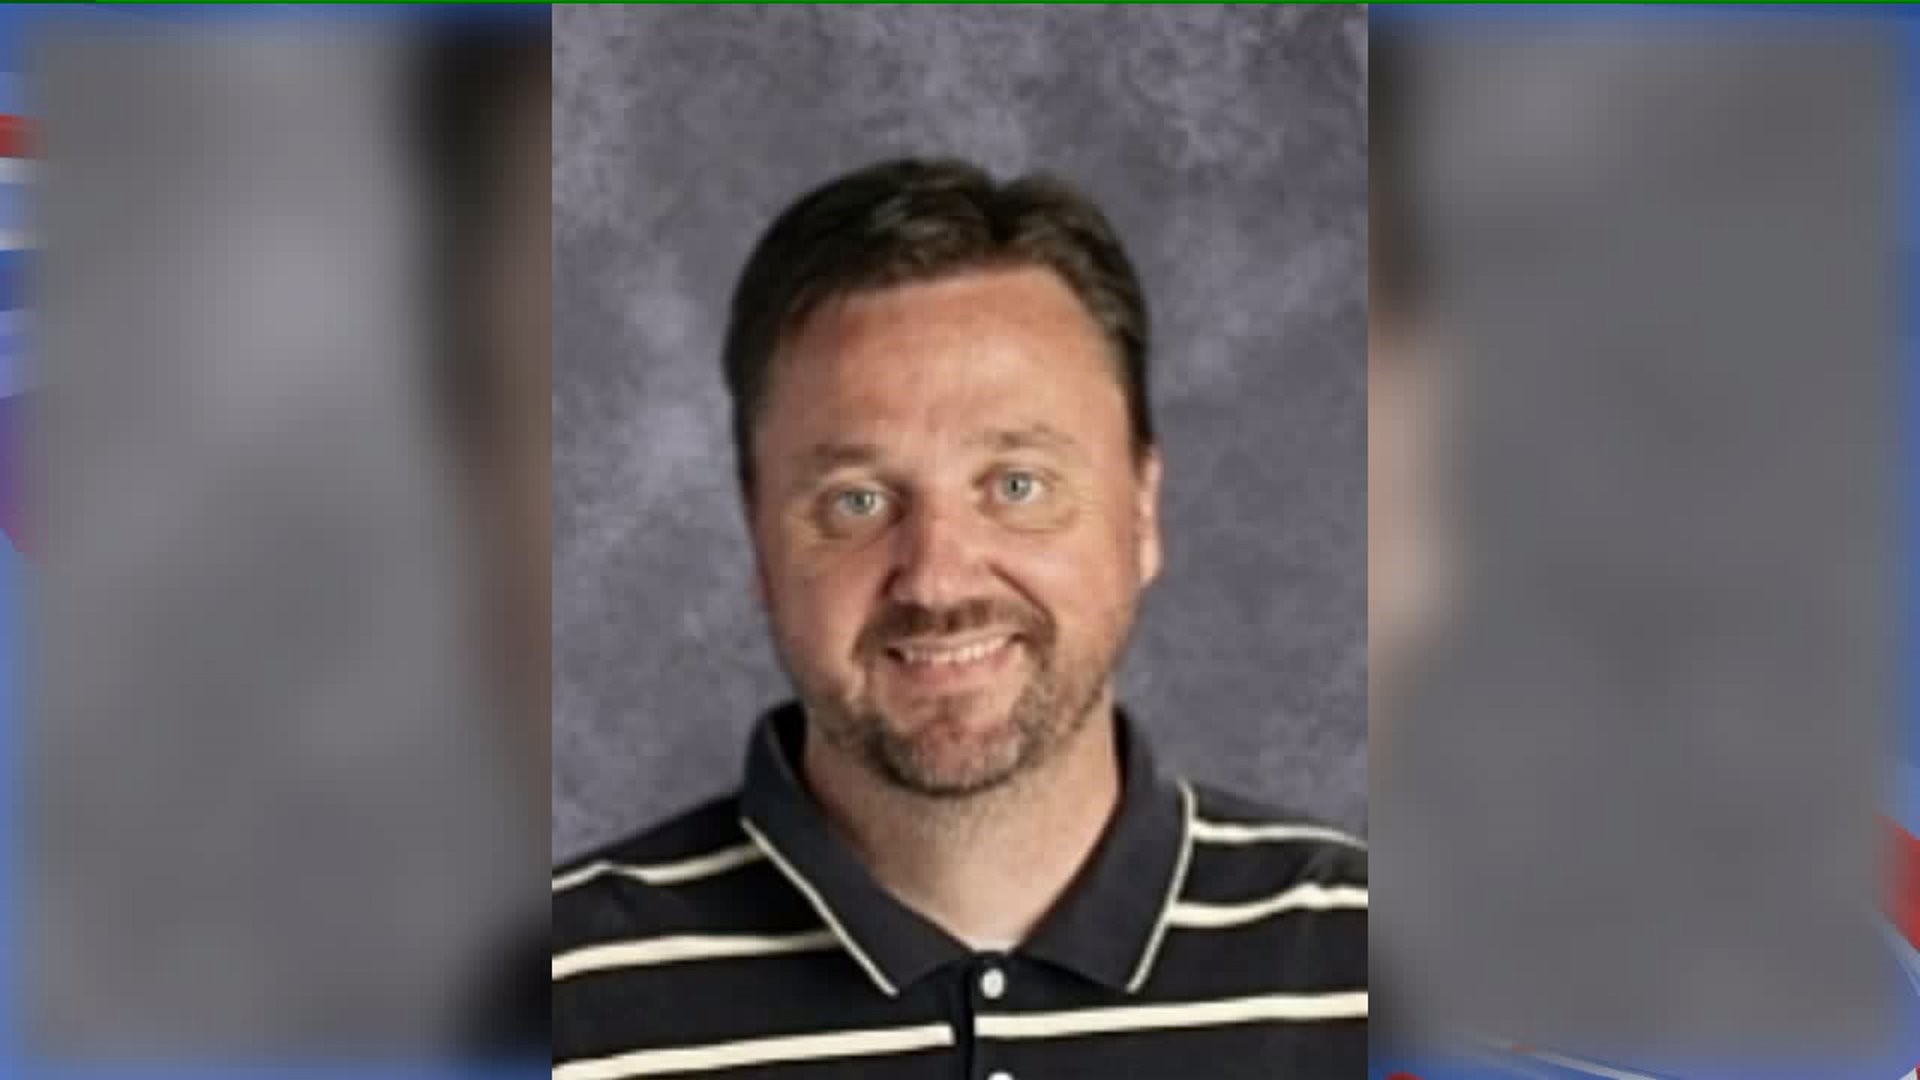 District mourns loss of elementary school principal in Burlington